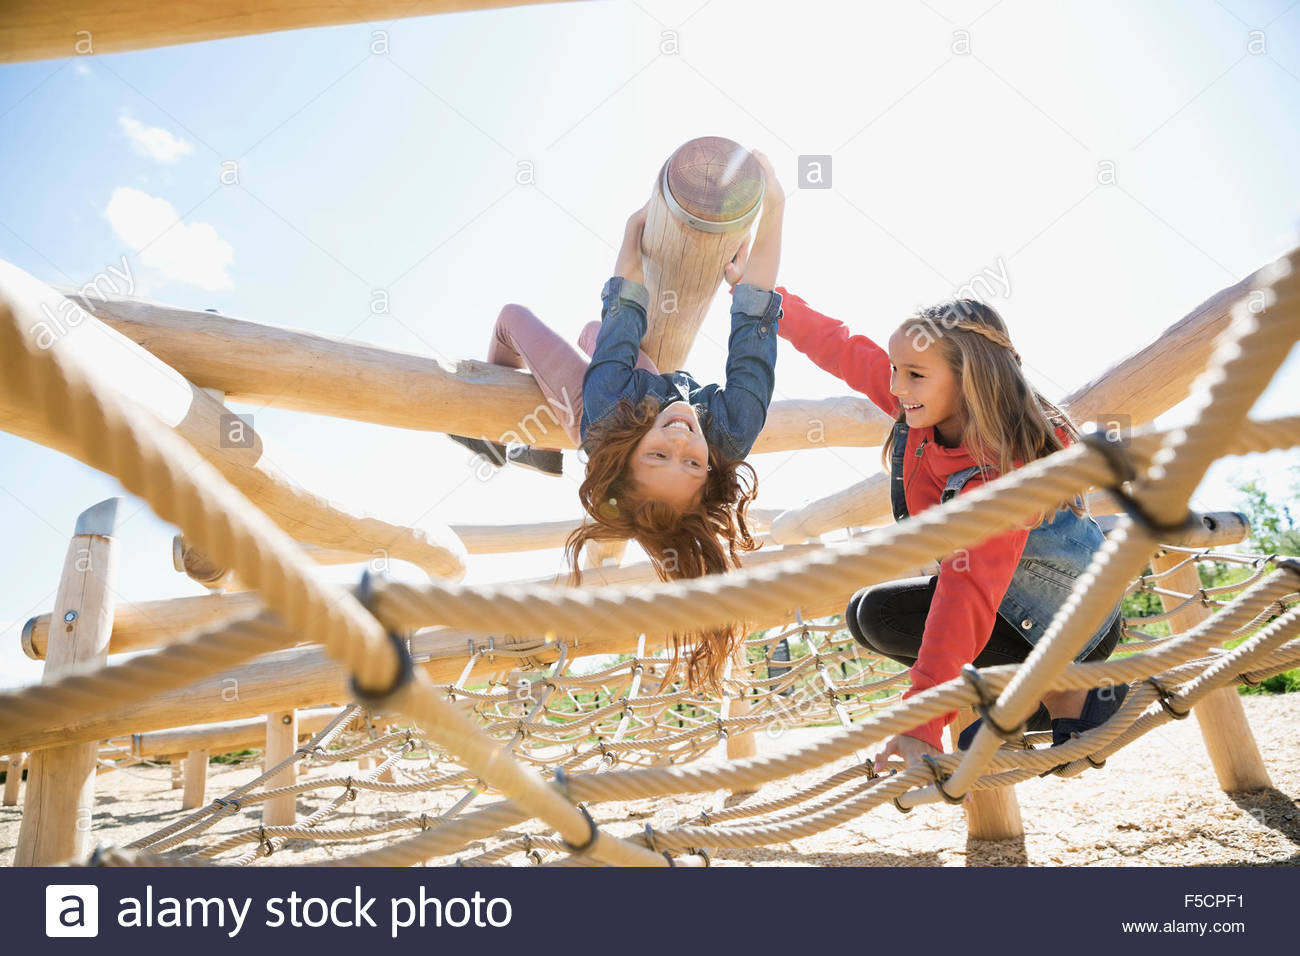 Girl hanging upside-down over net sunny playground Stock Photo